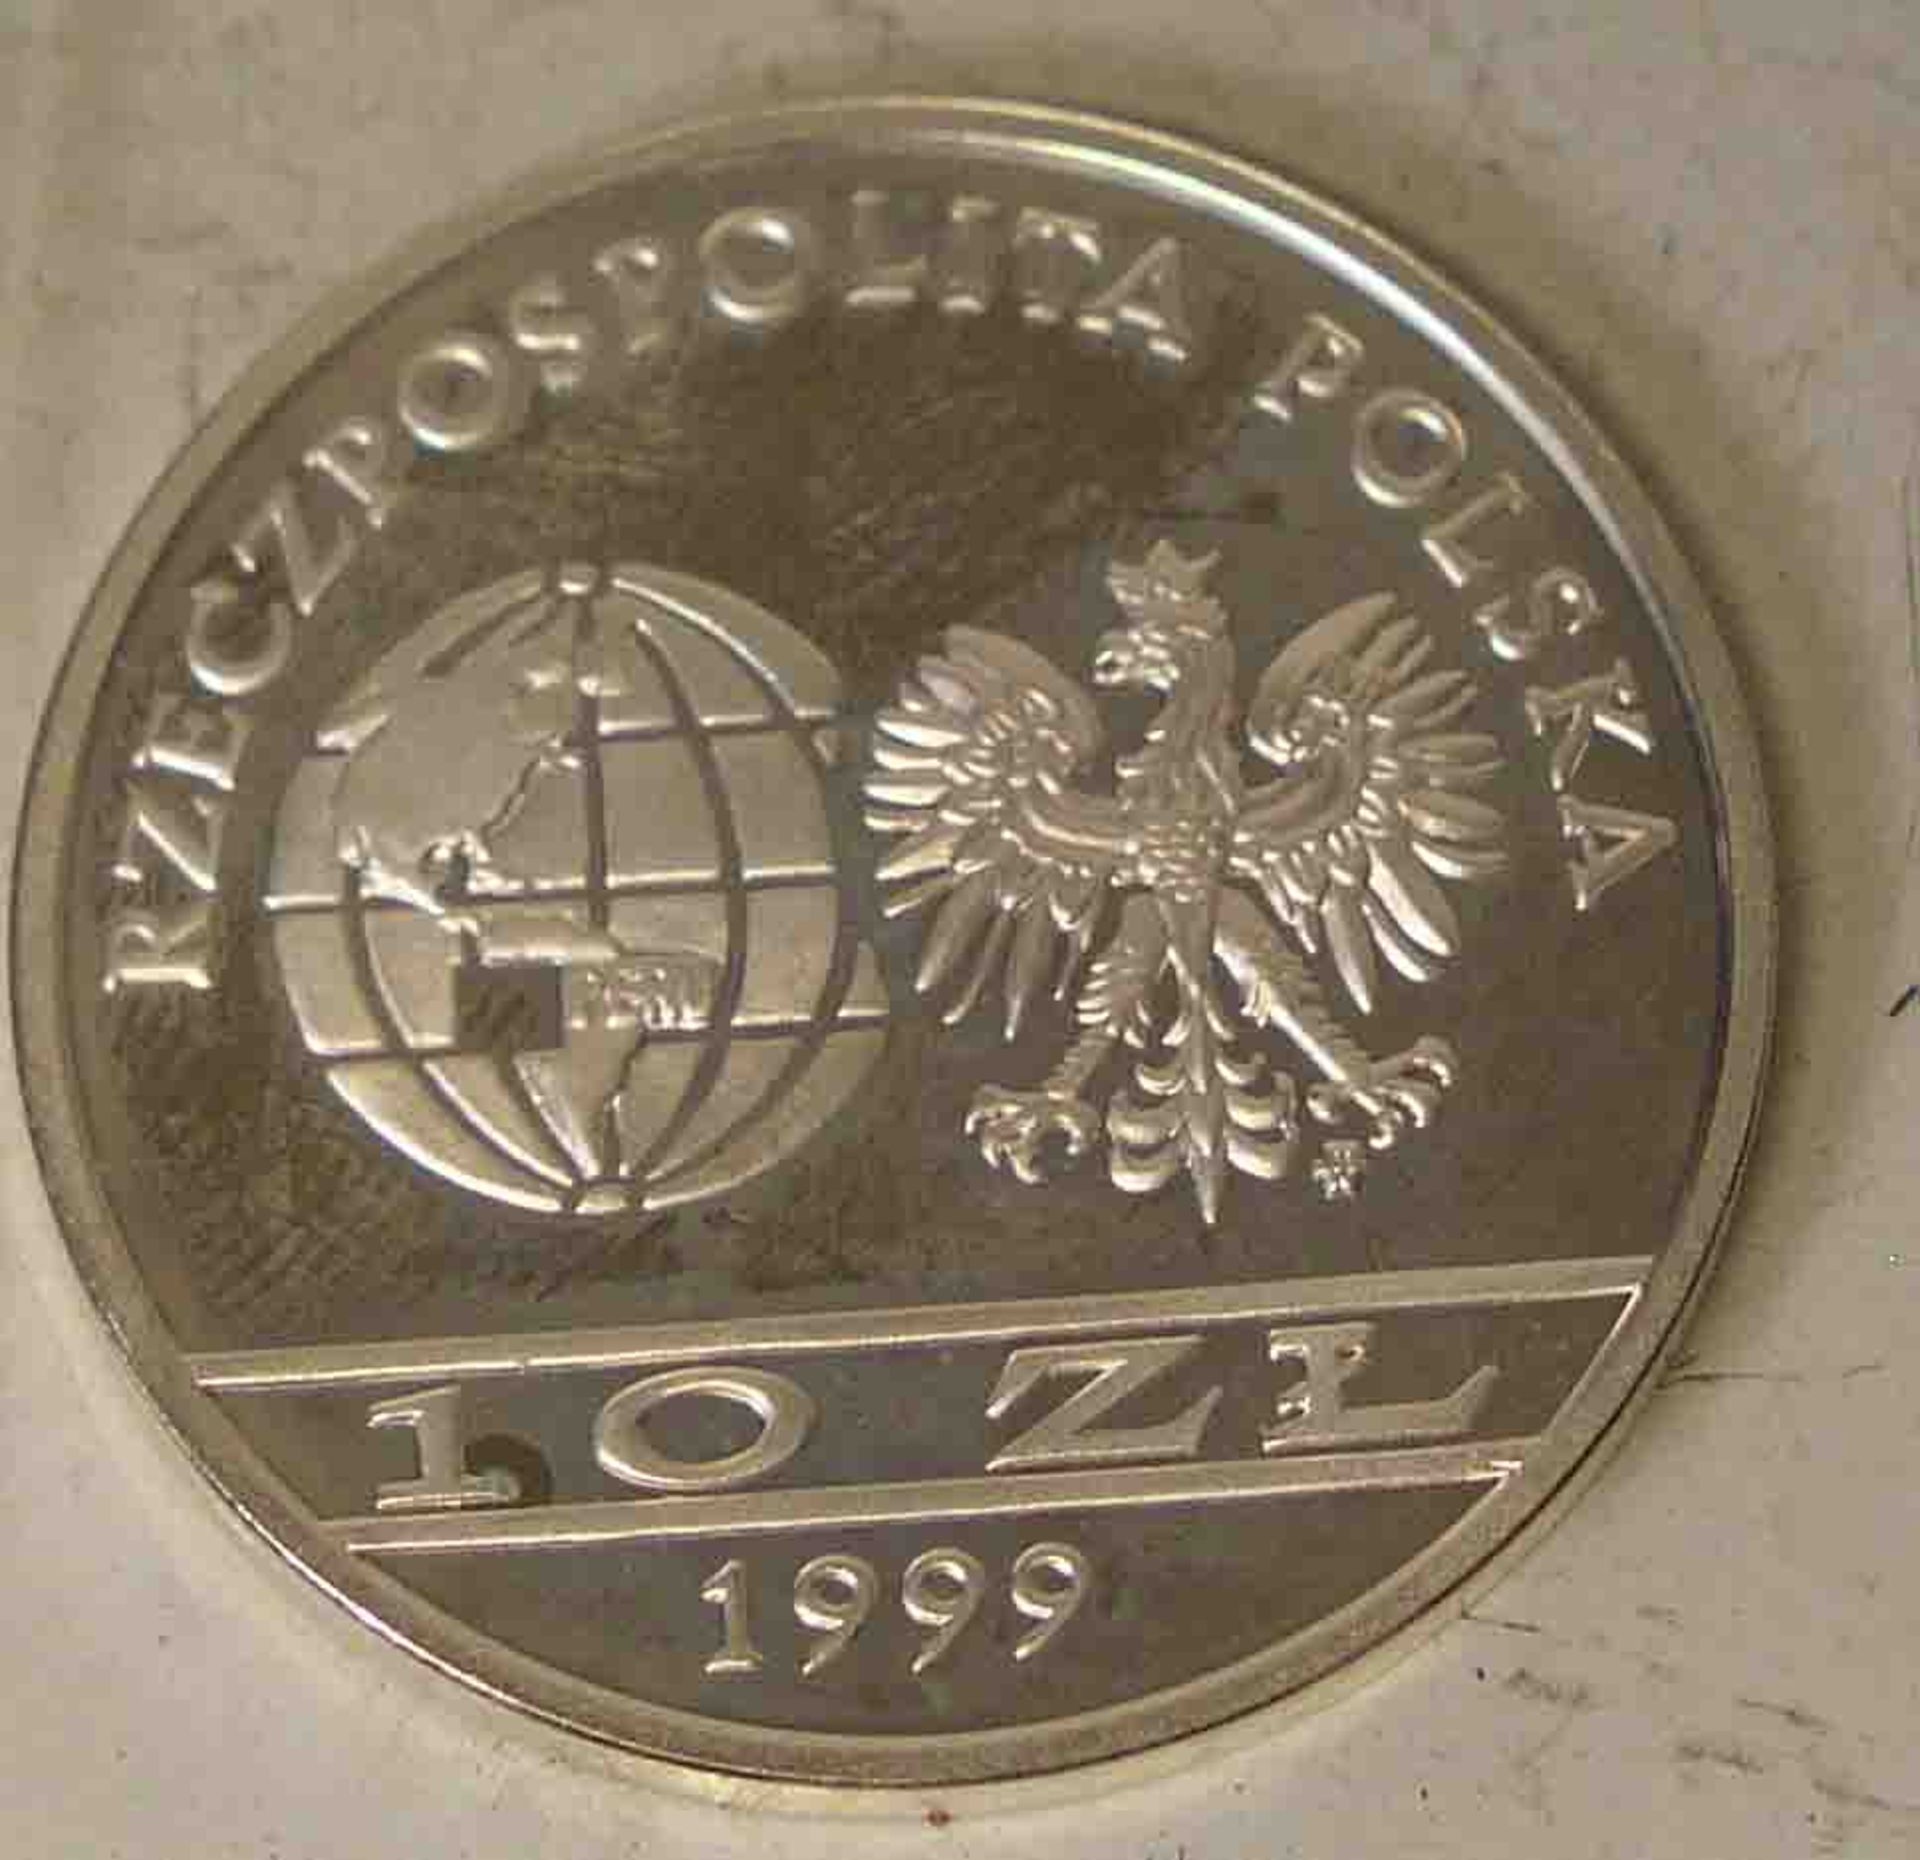 10-Zloty, Polen 1999, Sterling-Silber, "Eisenbahn".